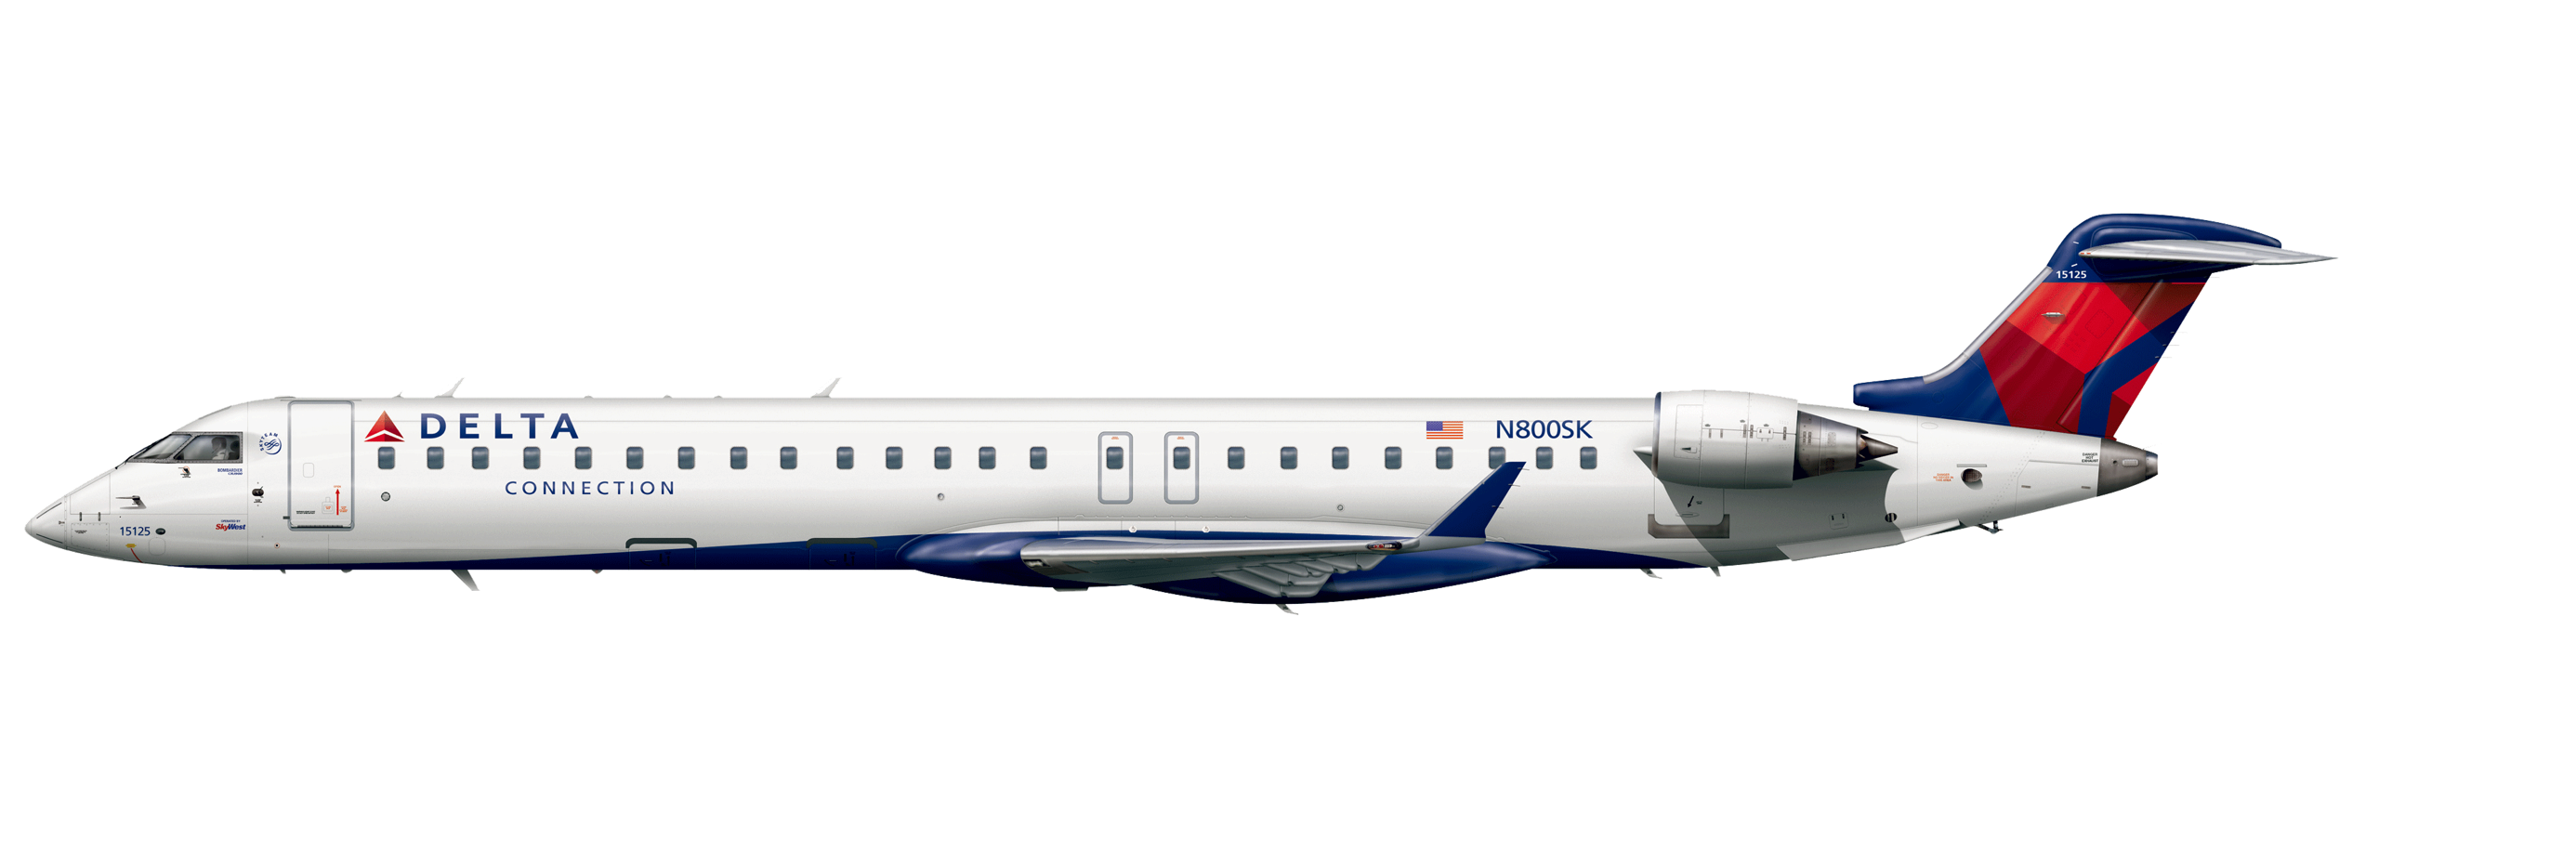 Bombardier Crj 900 Aircraft Seat Maps Specs Amenities Delta